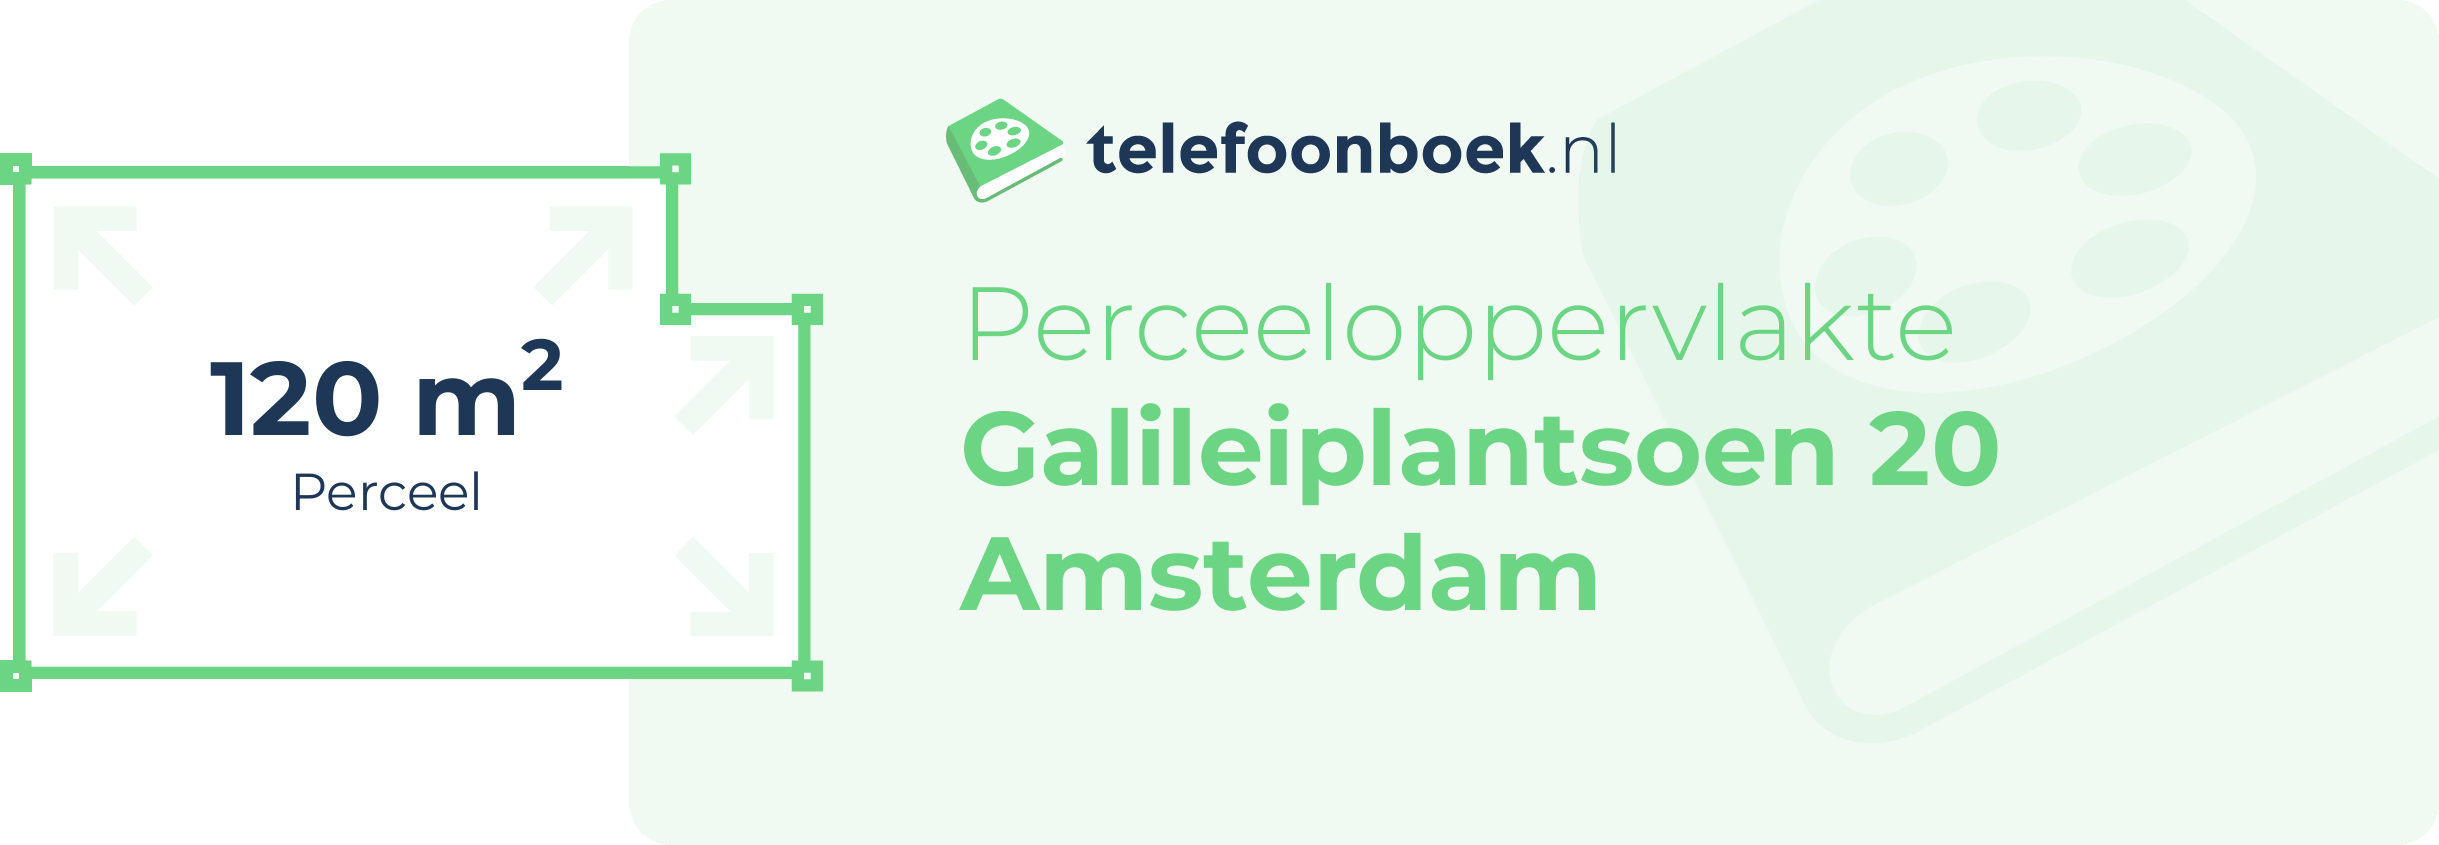 Perceeloppervlakte Galileiplantsoen 20 Amsterdam